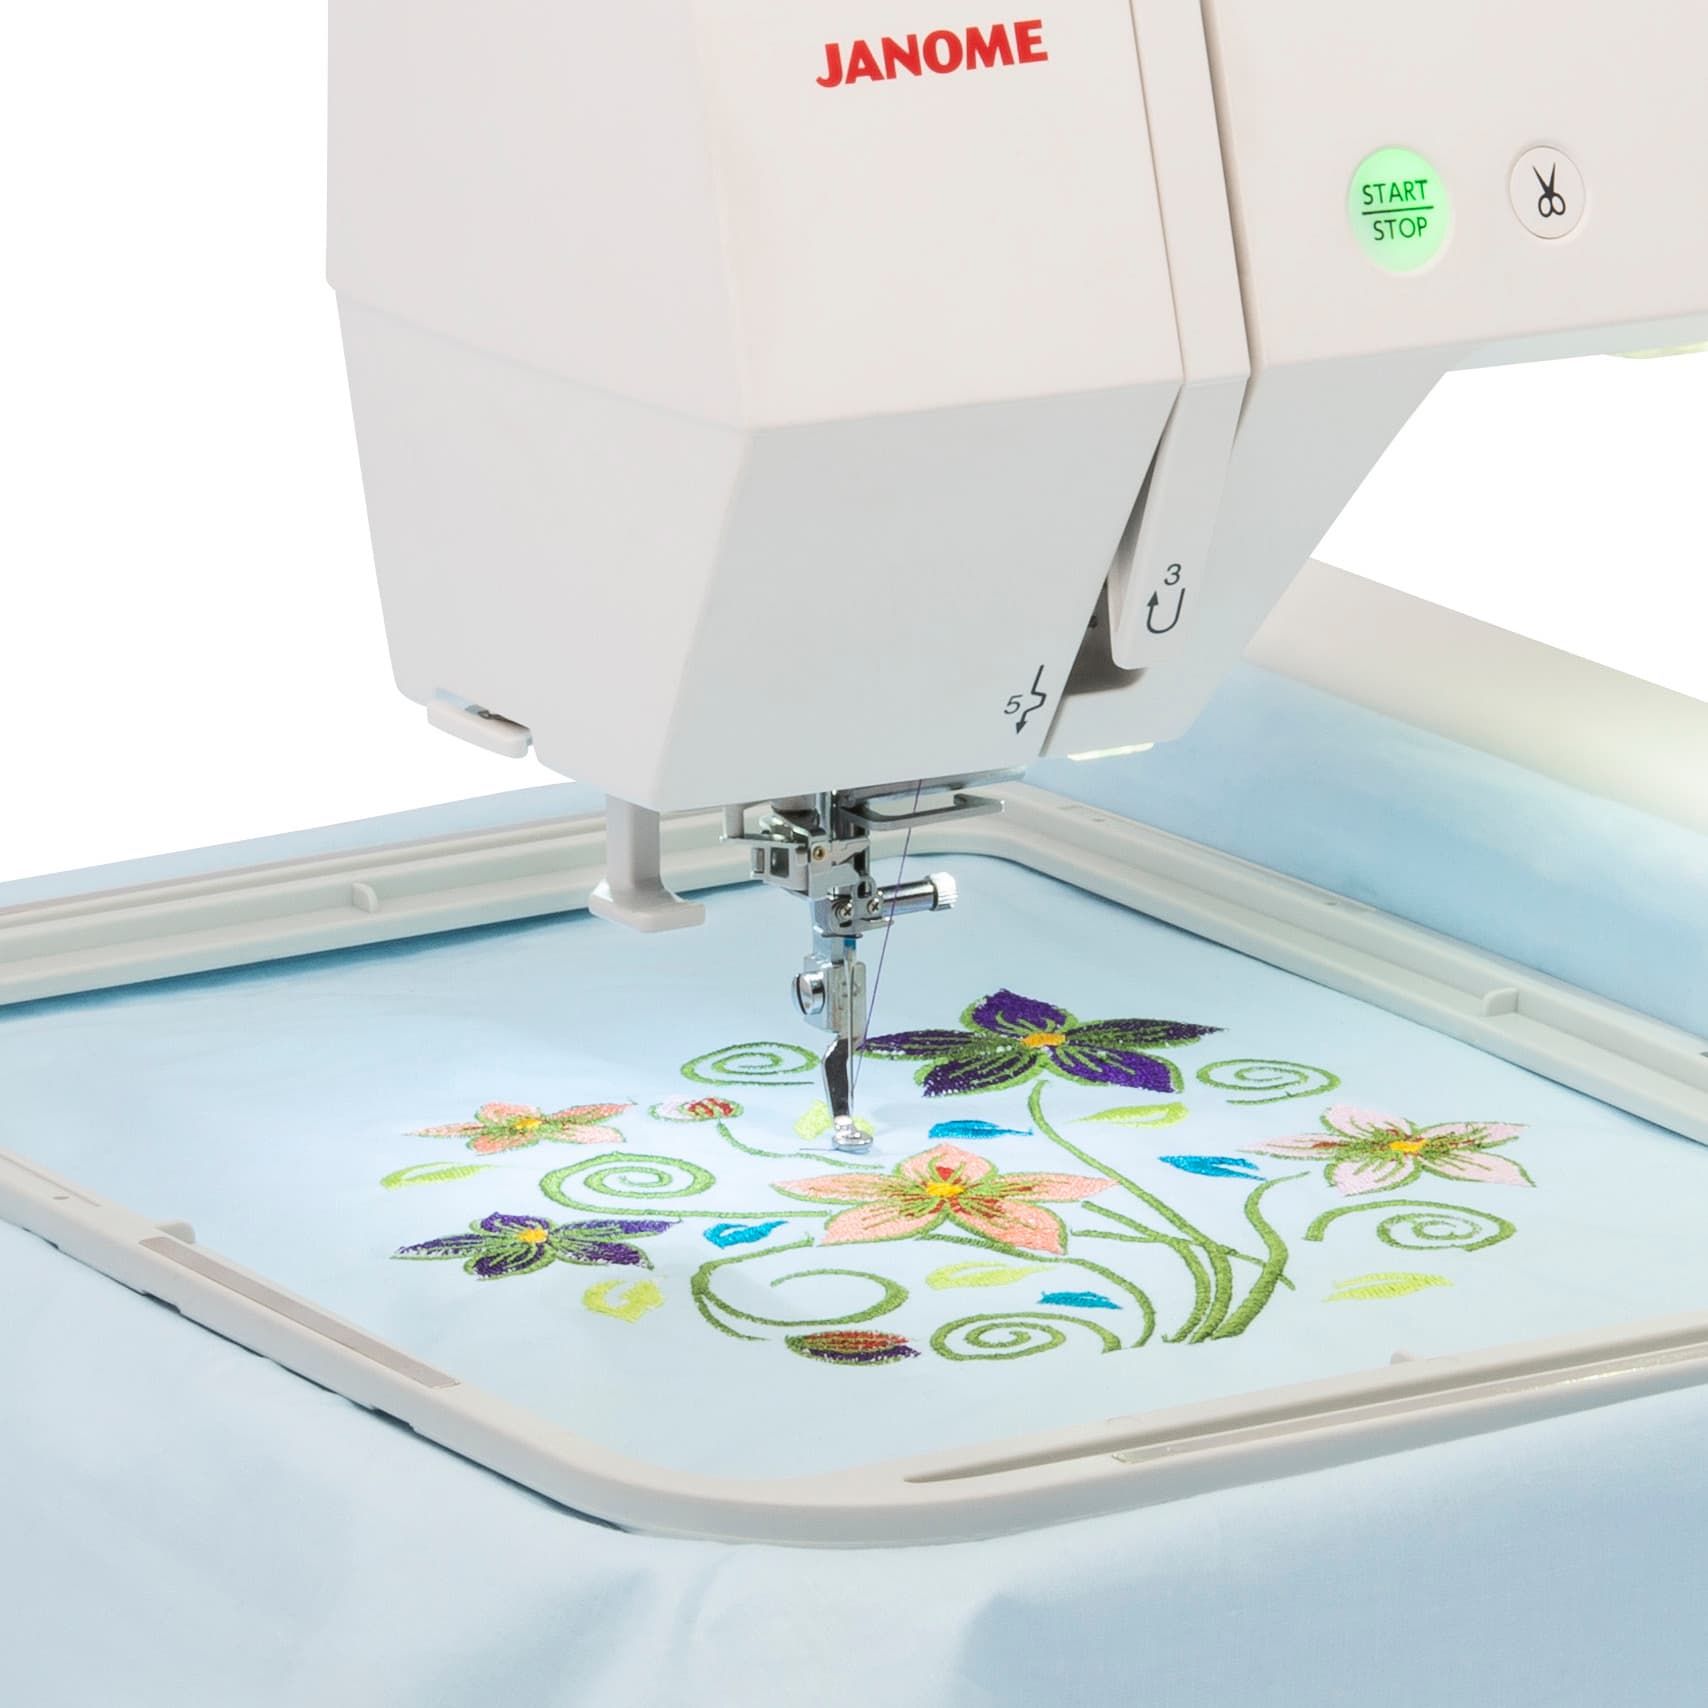 Janome Memory Craft 500E Embroidery Machine image # 119696